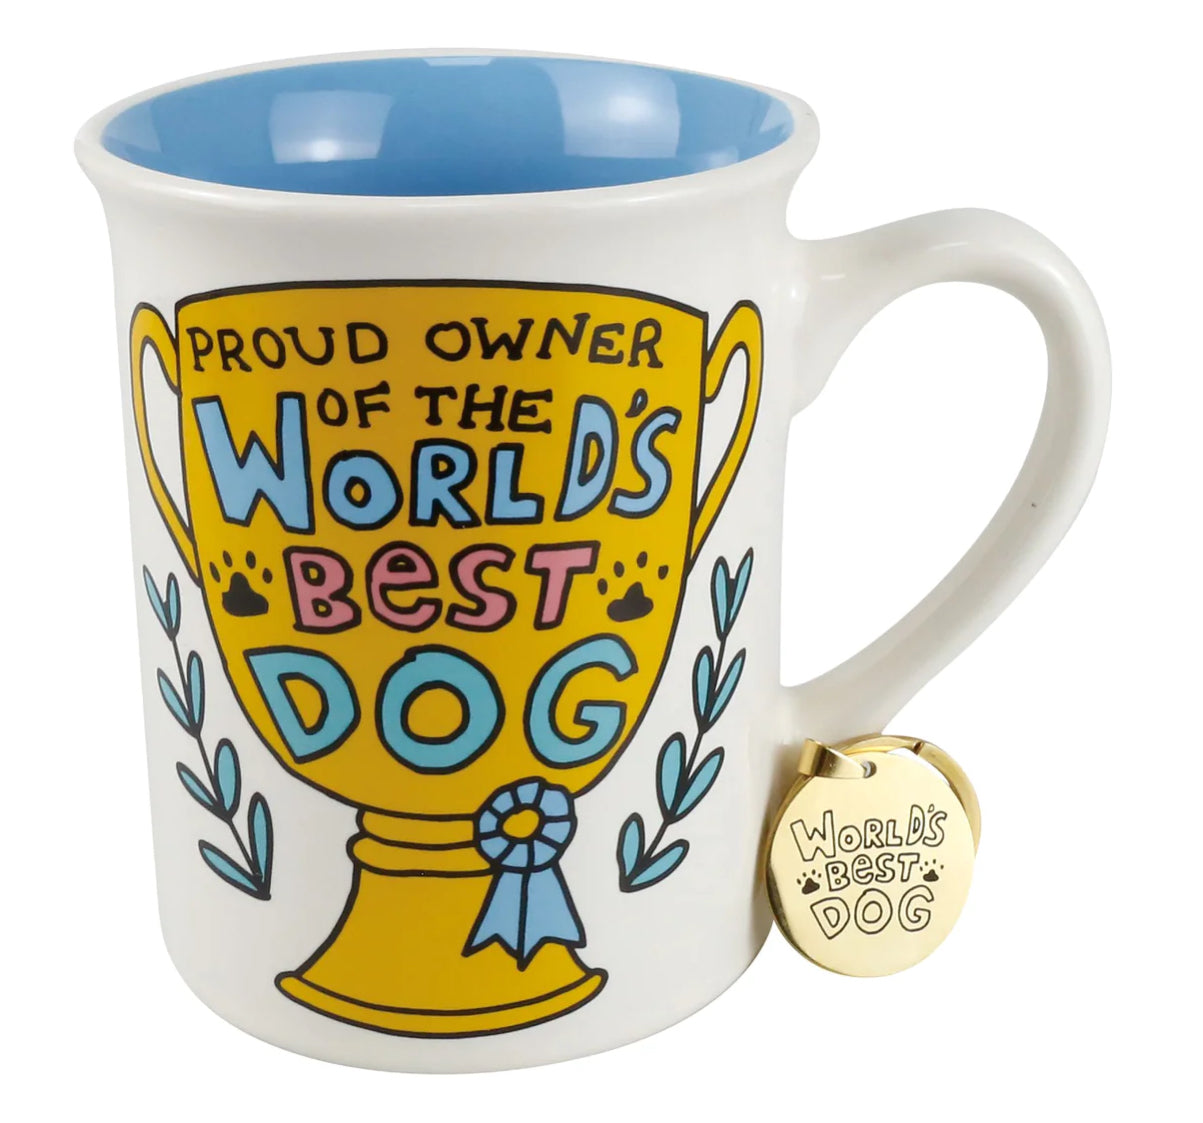 Best Dog Mug & Dog Tag Set